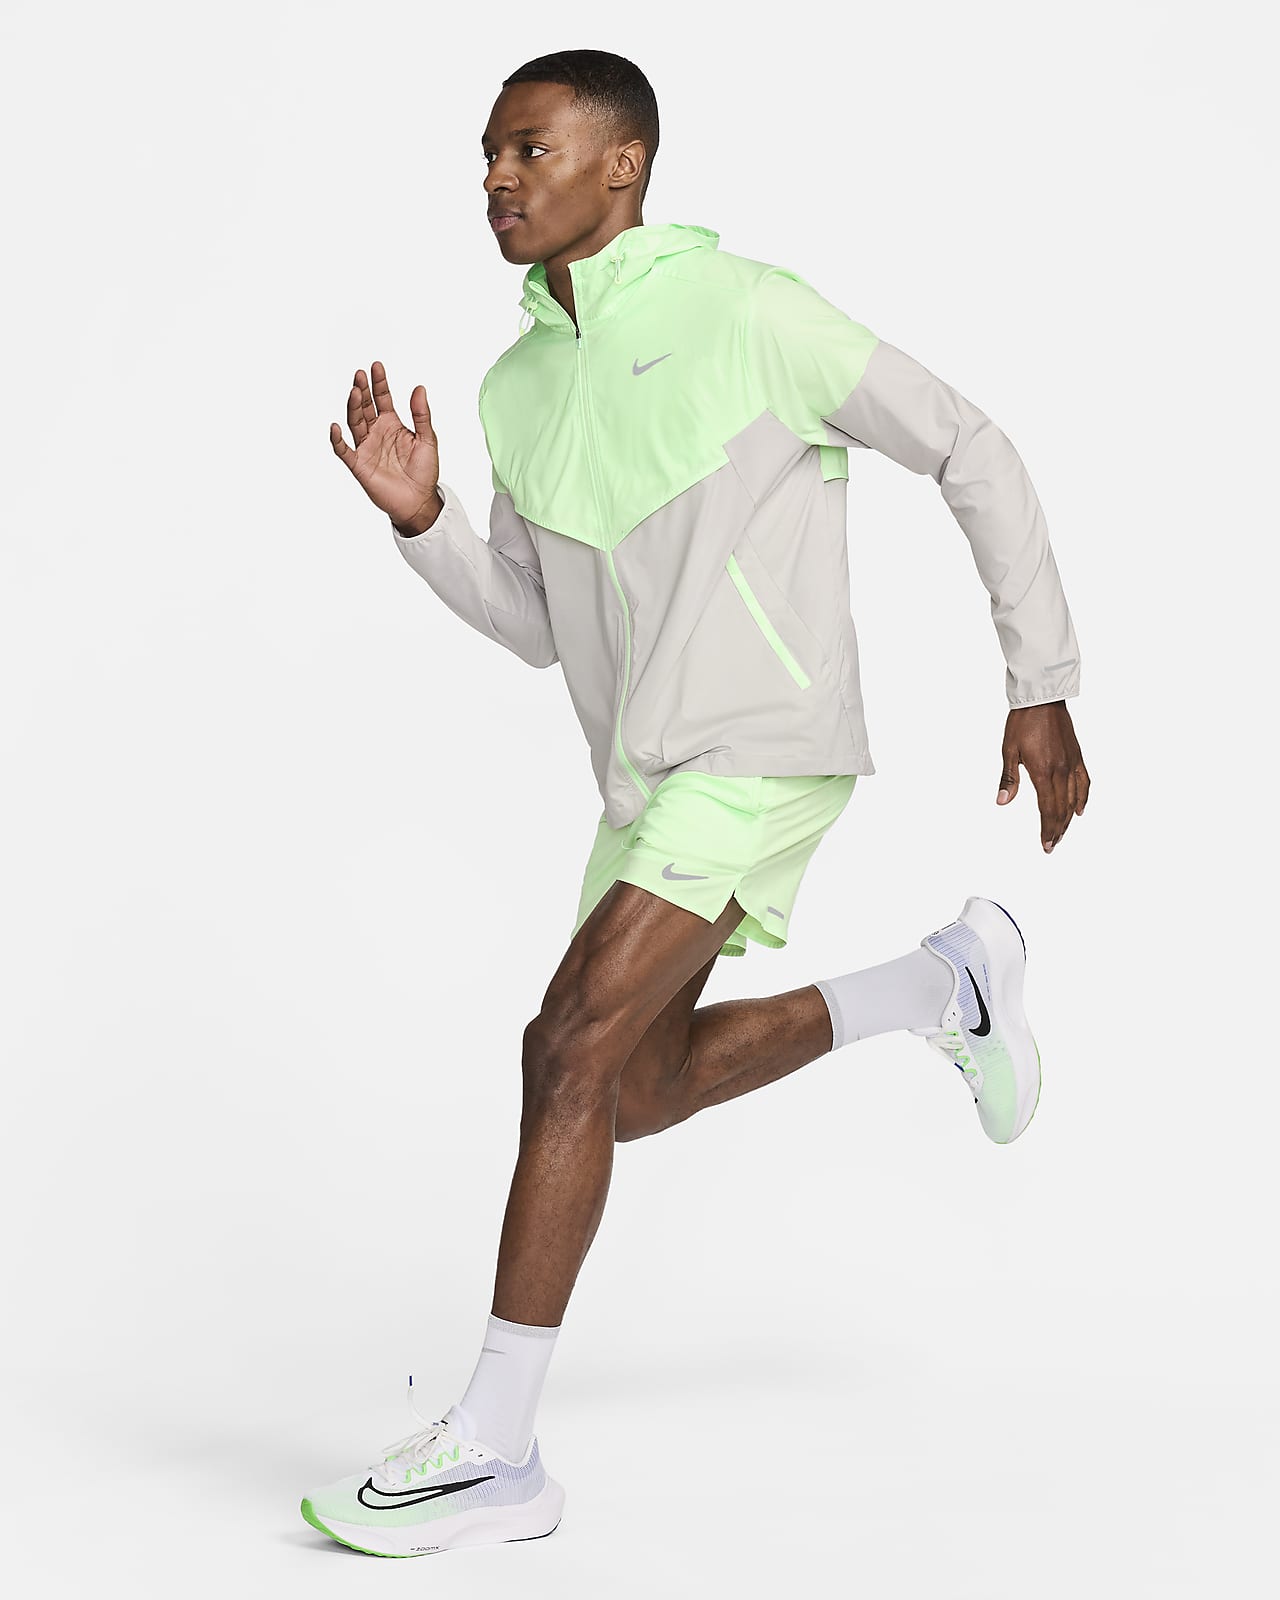 Nike Dri-Fit UV Arm Sleeves Running VaporGreen